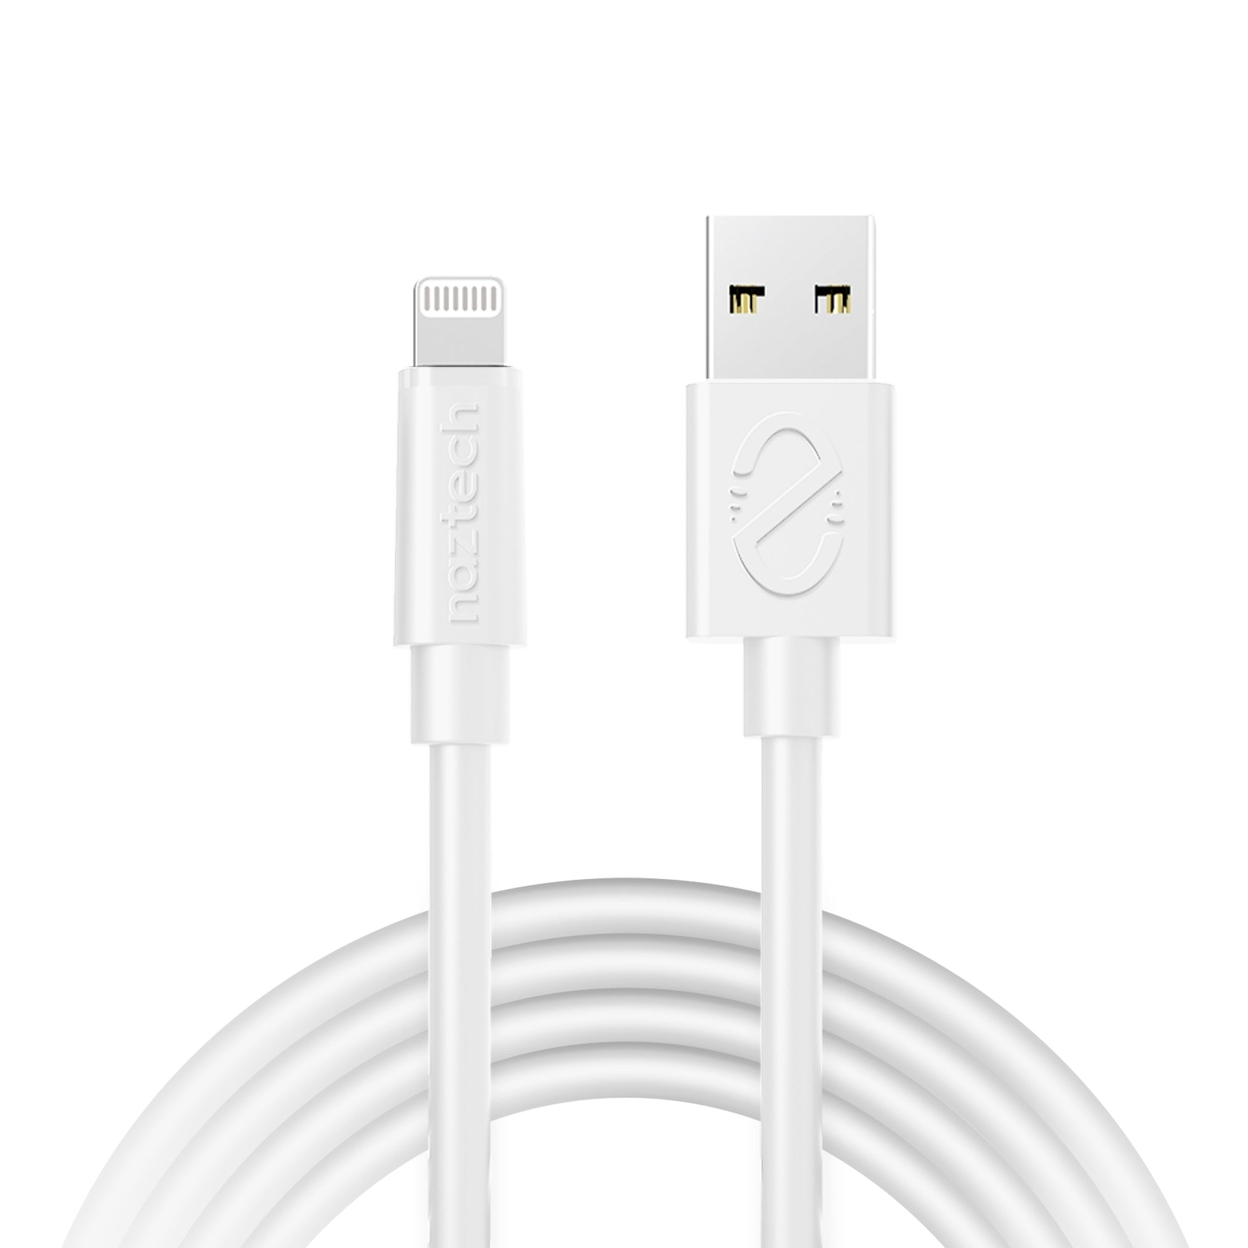 Naztech USB To MFi Lightning Cable 12ft (LIGHTNING-PRNT) - White